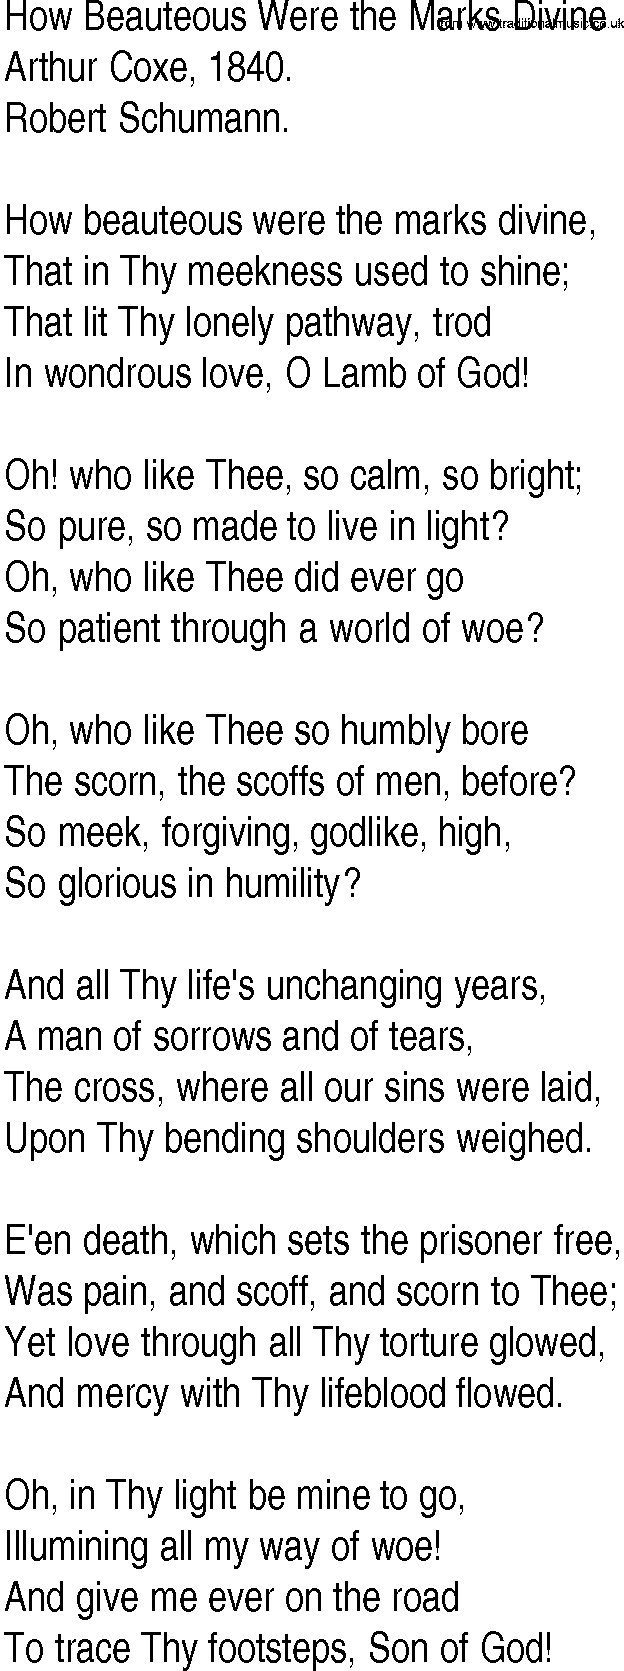 Hymn and Gospel Song: How Beauteous Were the Marks Divine by Arthur Coxe lyrics